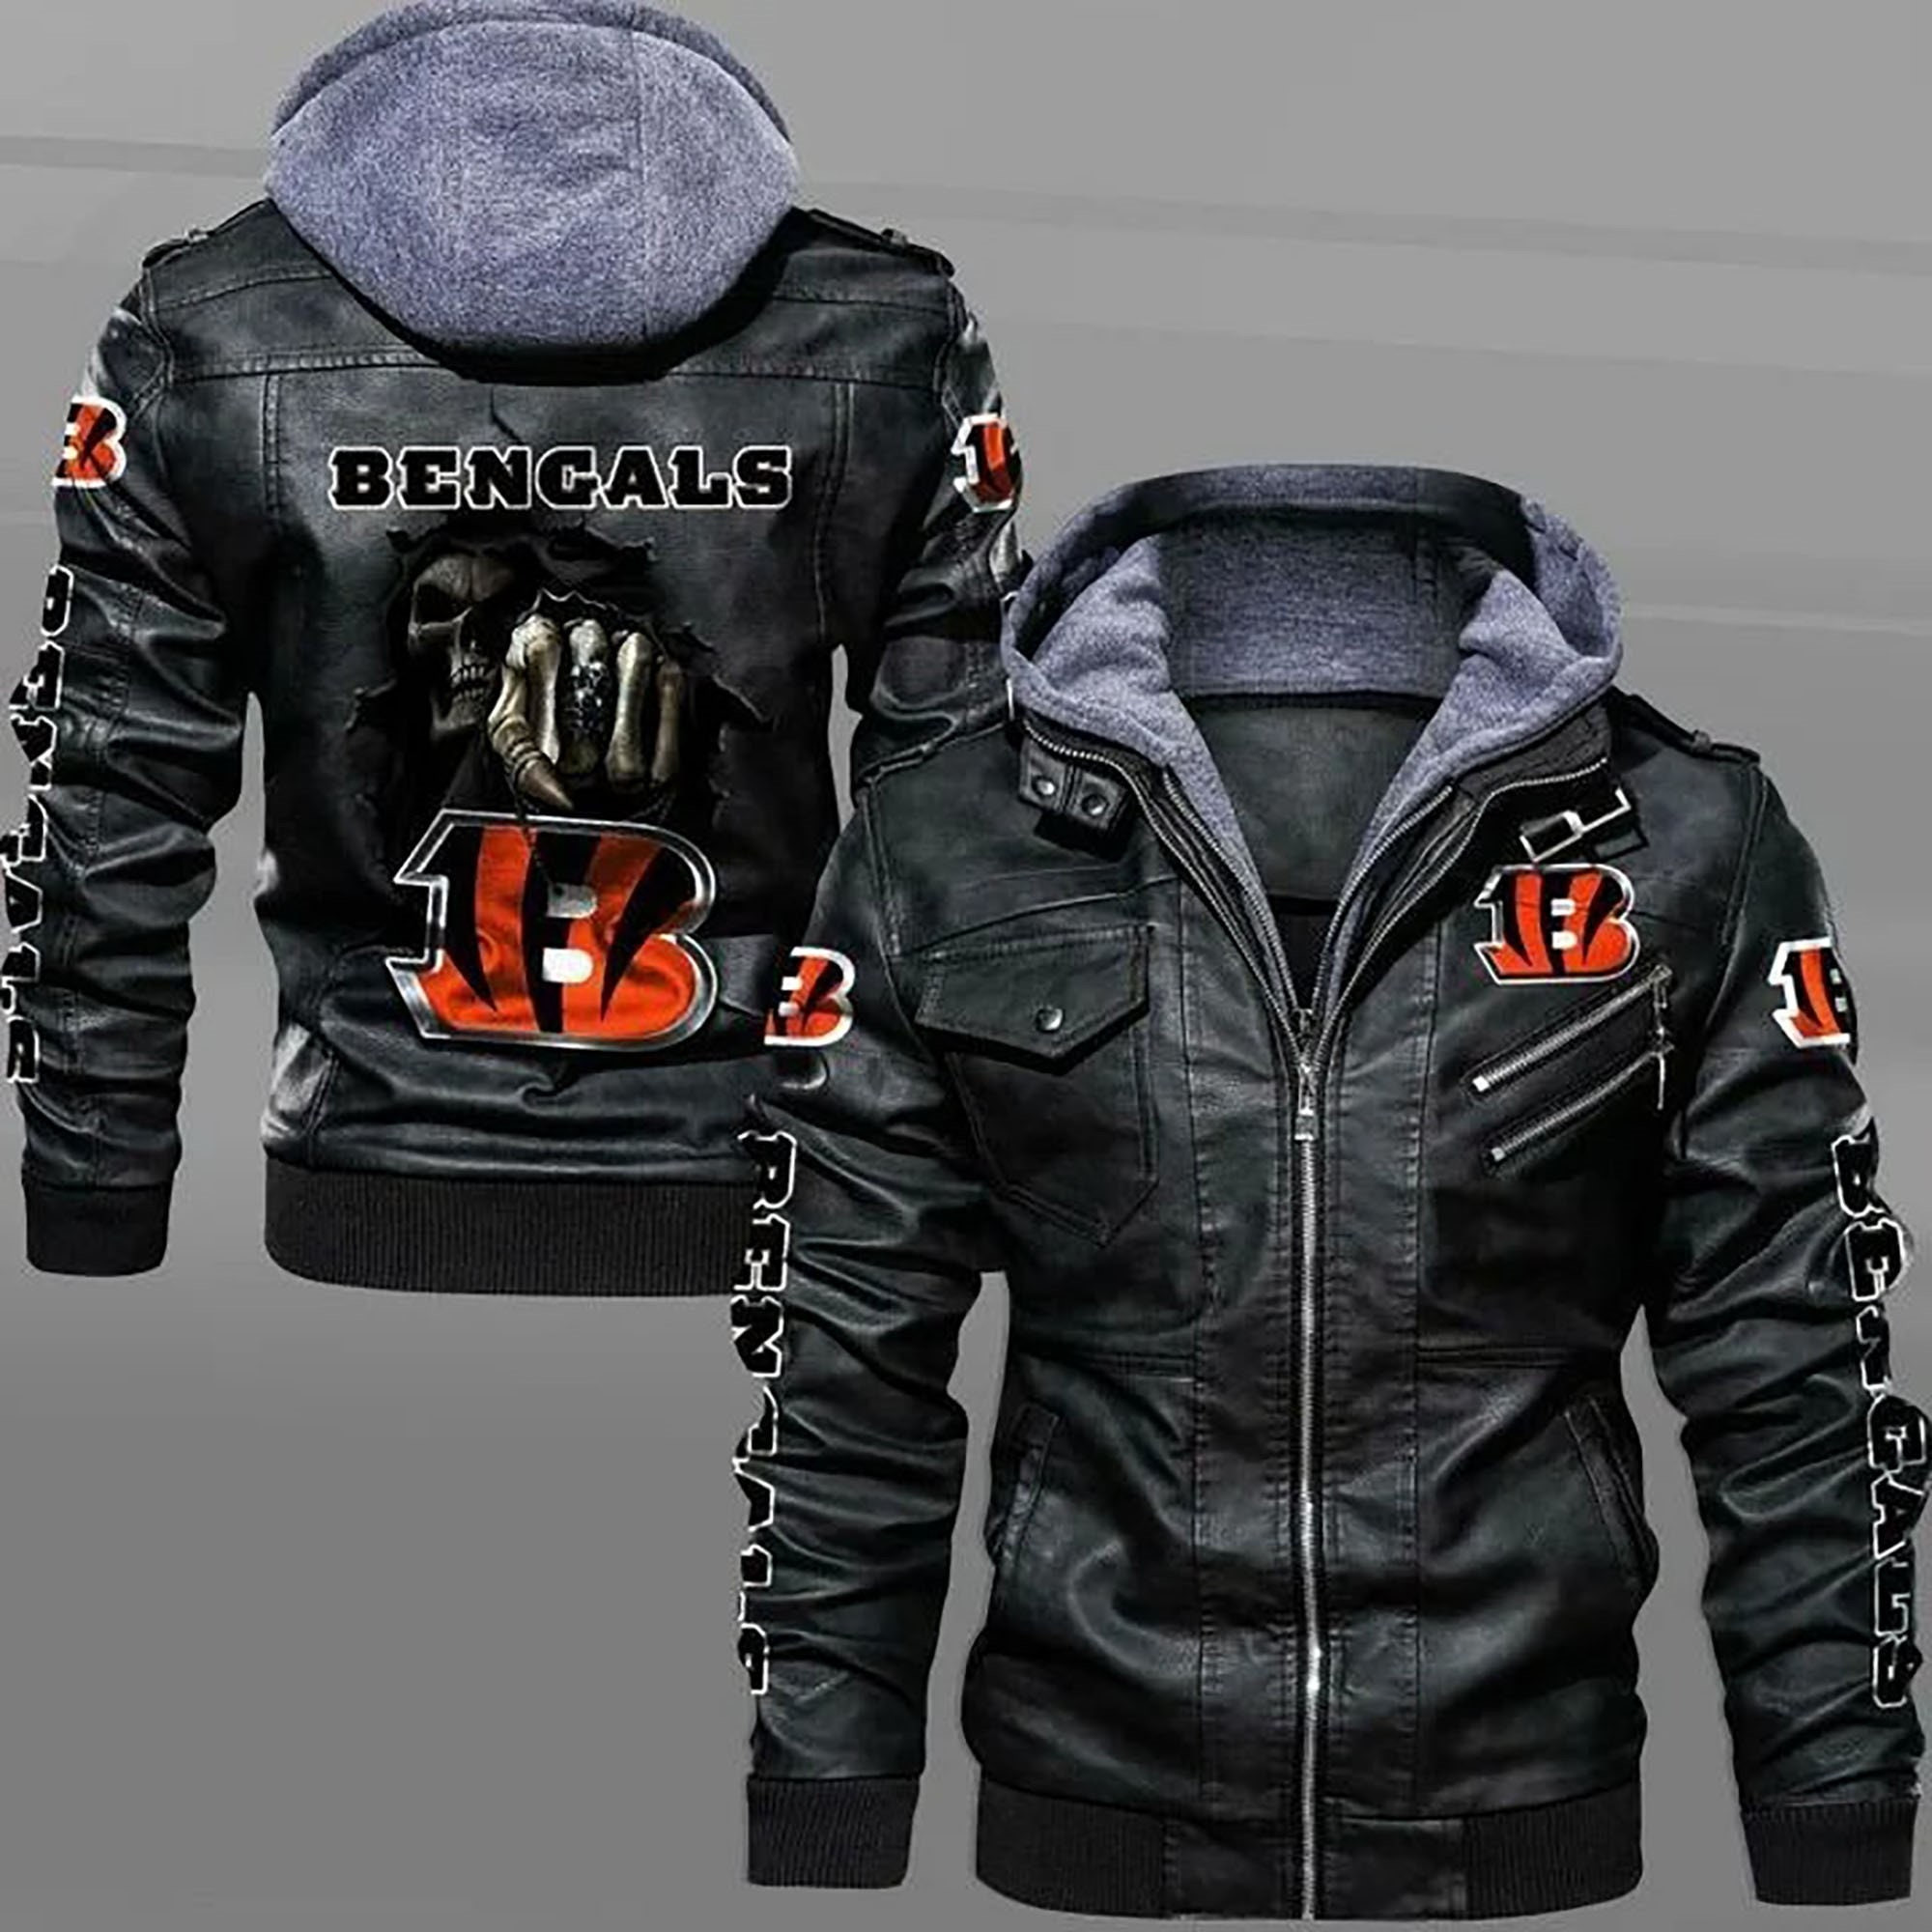 Choosing Leather Jacket that looks good on you below 86